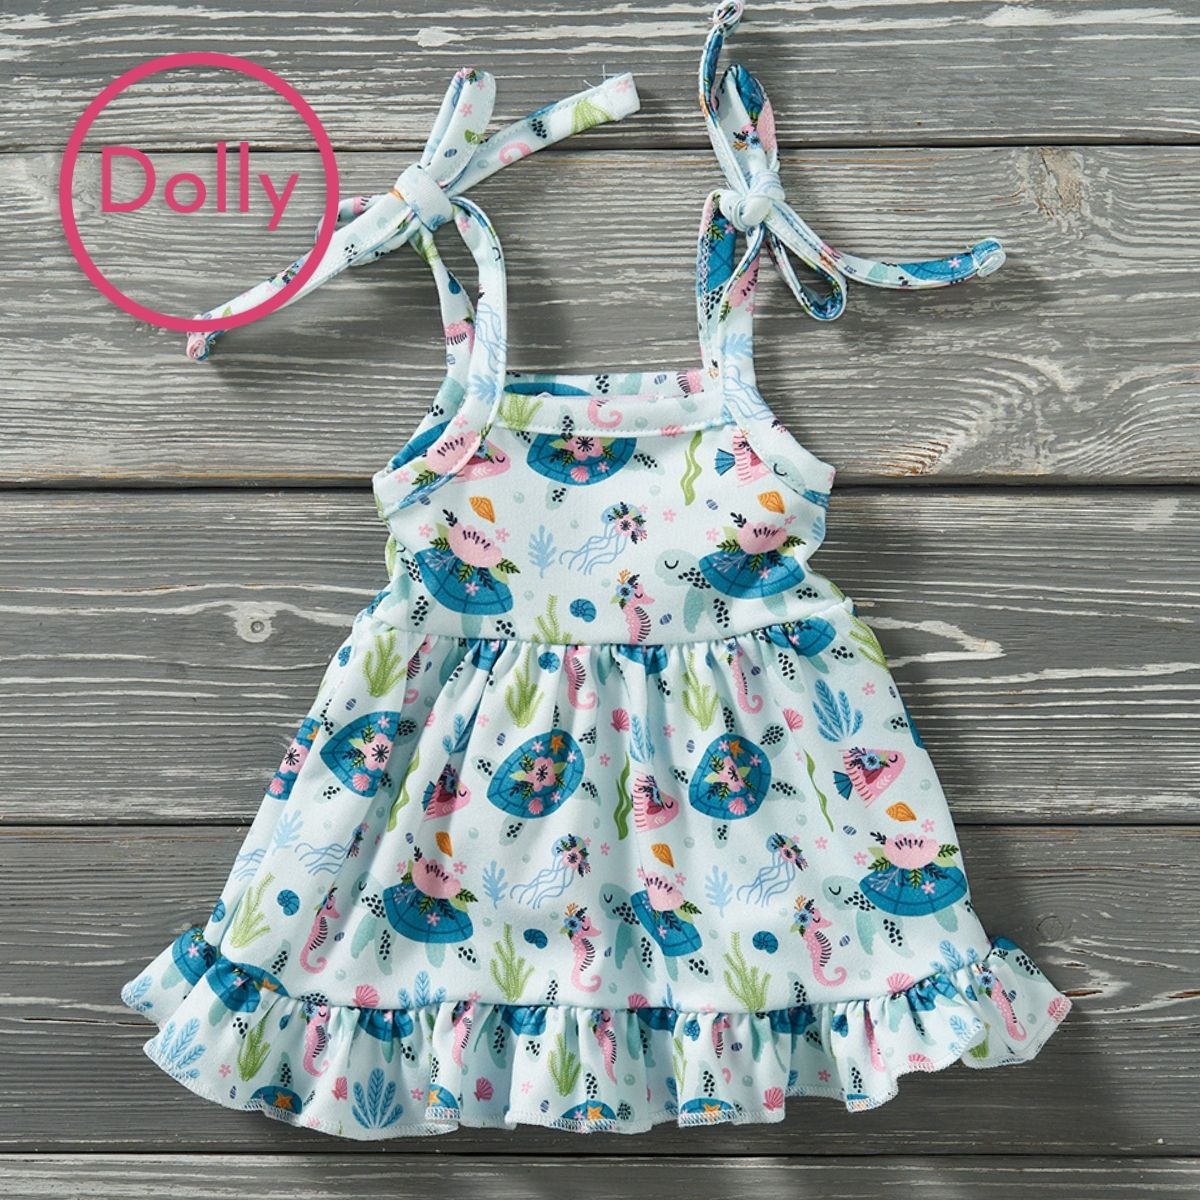 Turtle Bay - Dolly Dress